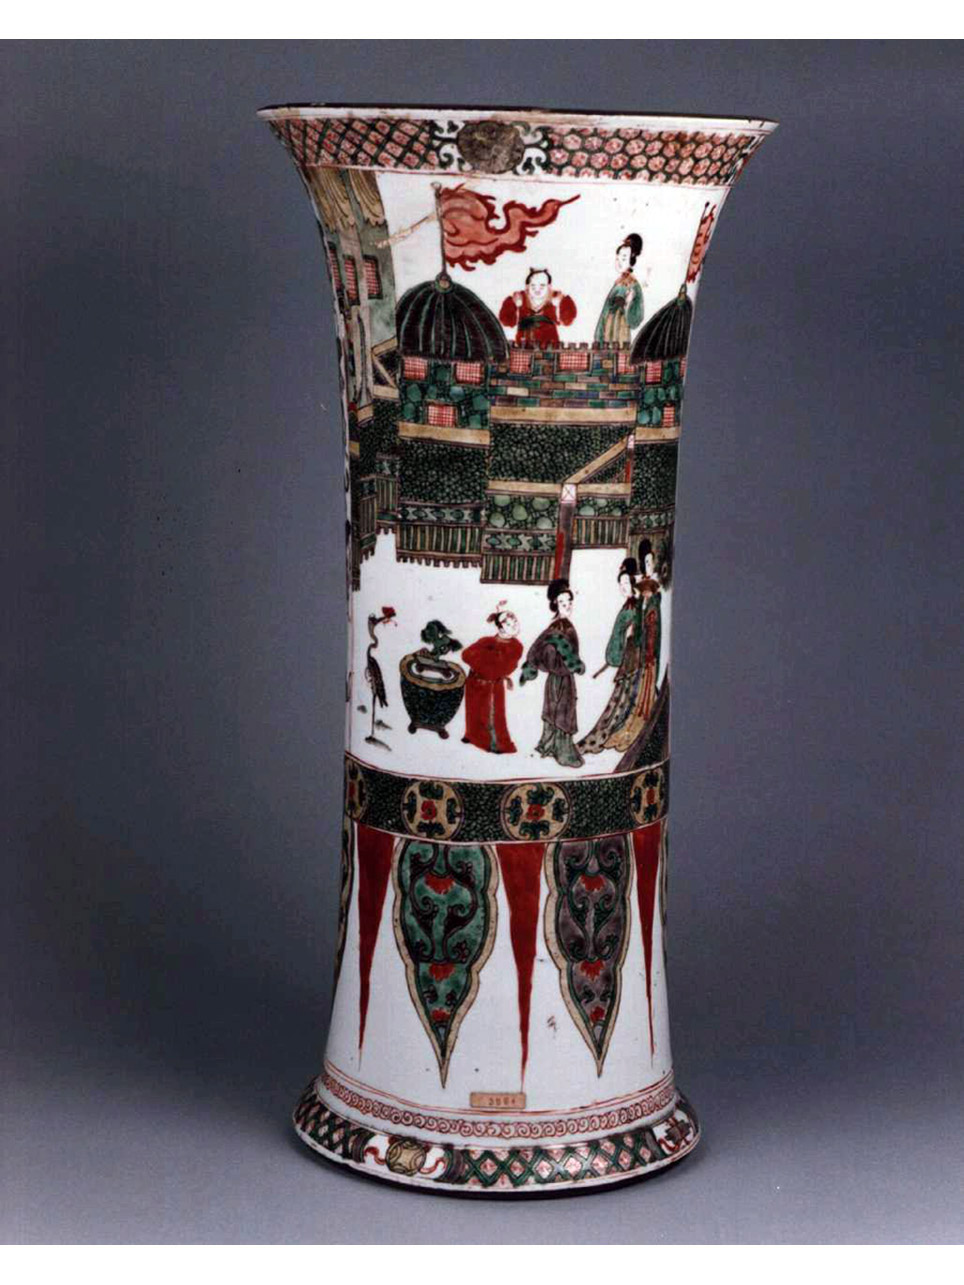 scena di corte/ motivi decorativi geometrici e vegetali (vaso) - manifattura cinese (secc. XVII/ XVIII)